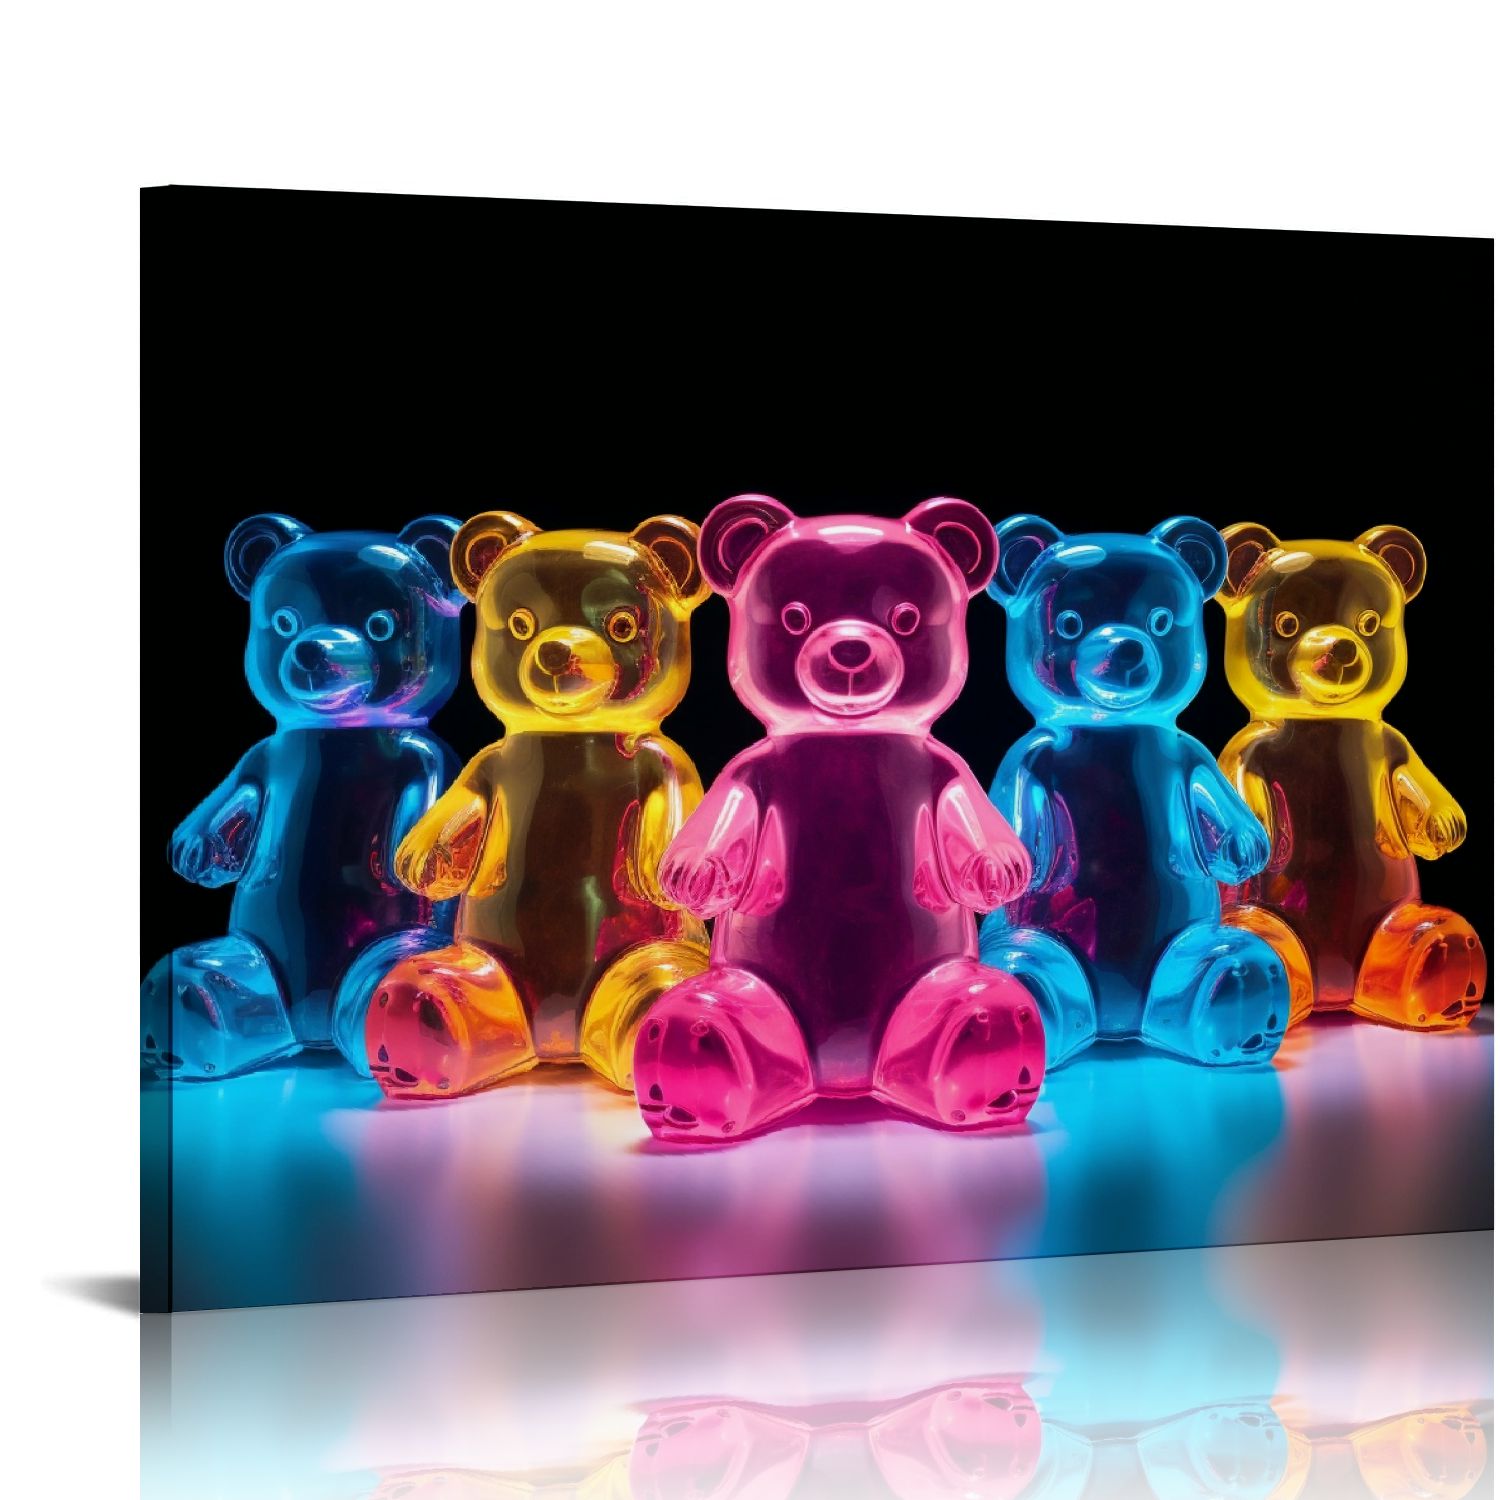 Gummy Bear Decorations